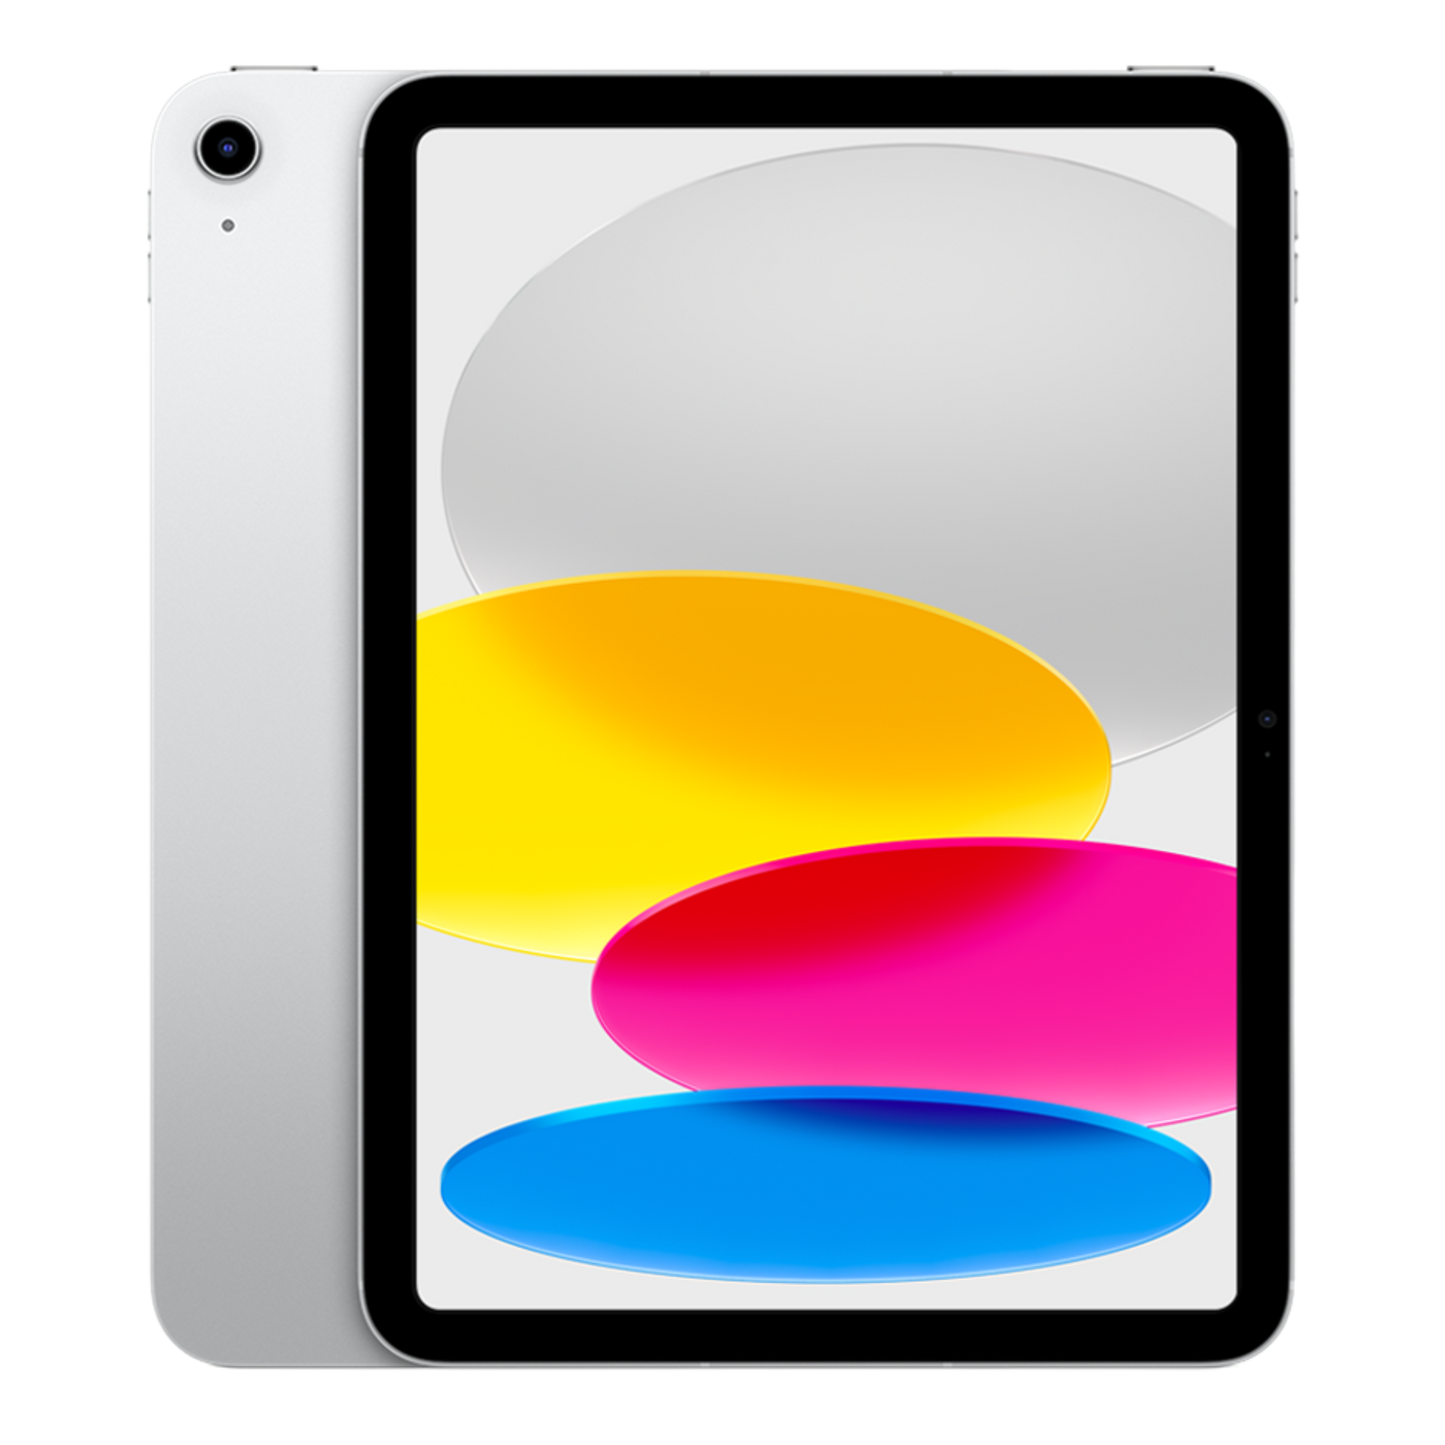 iPad (10th Generation) - Yellow